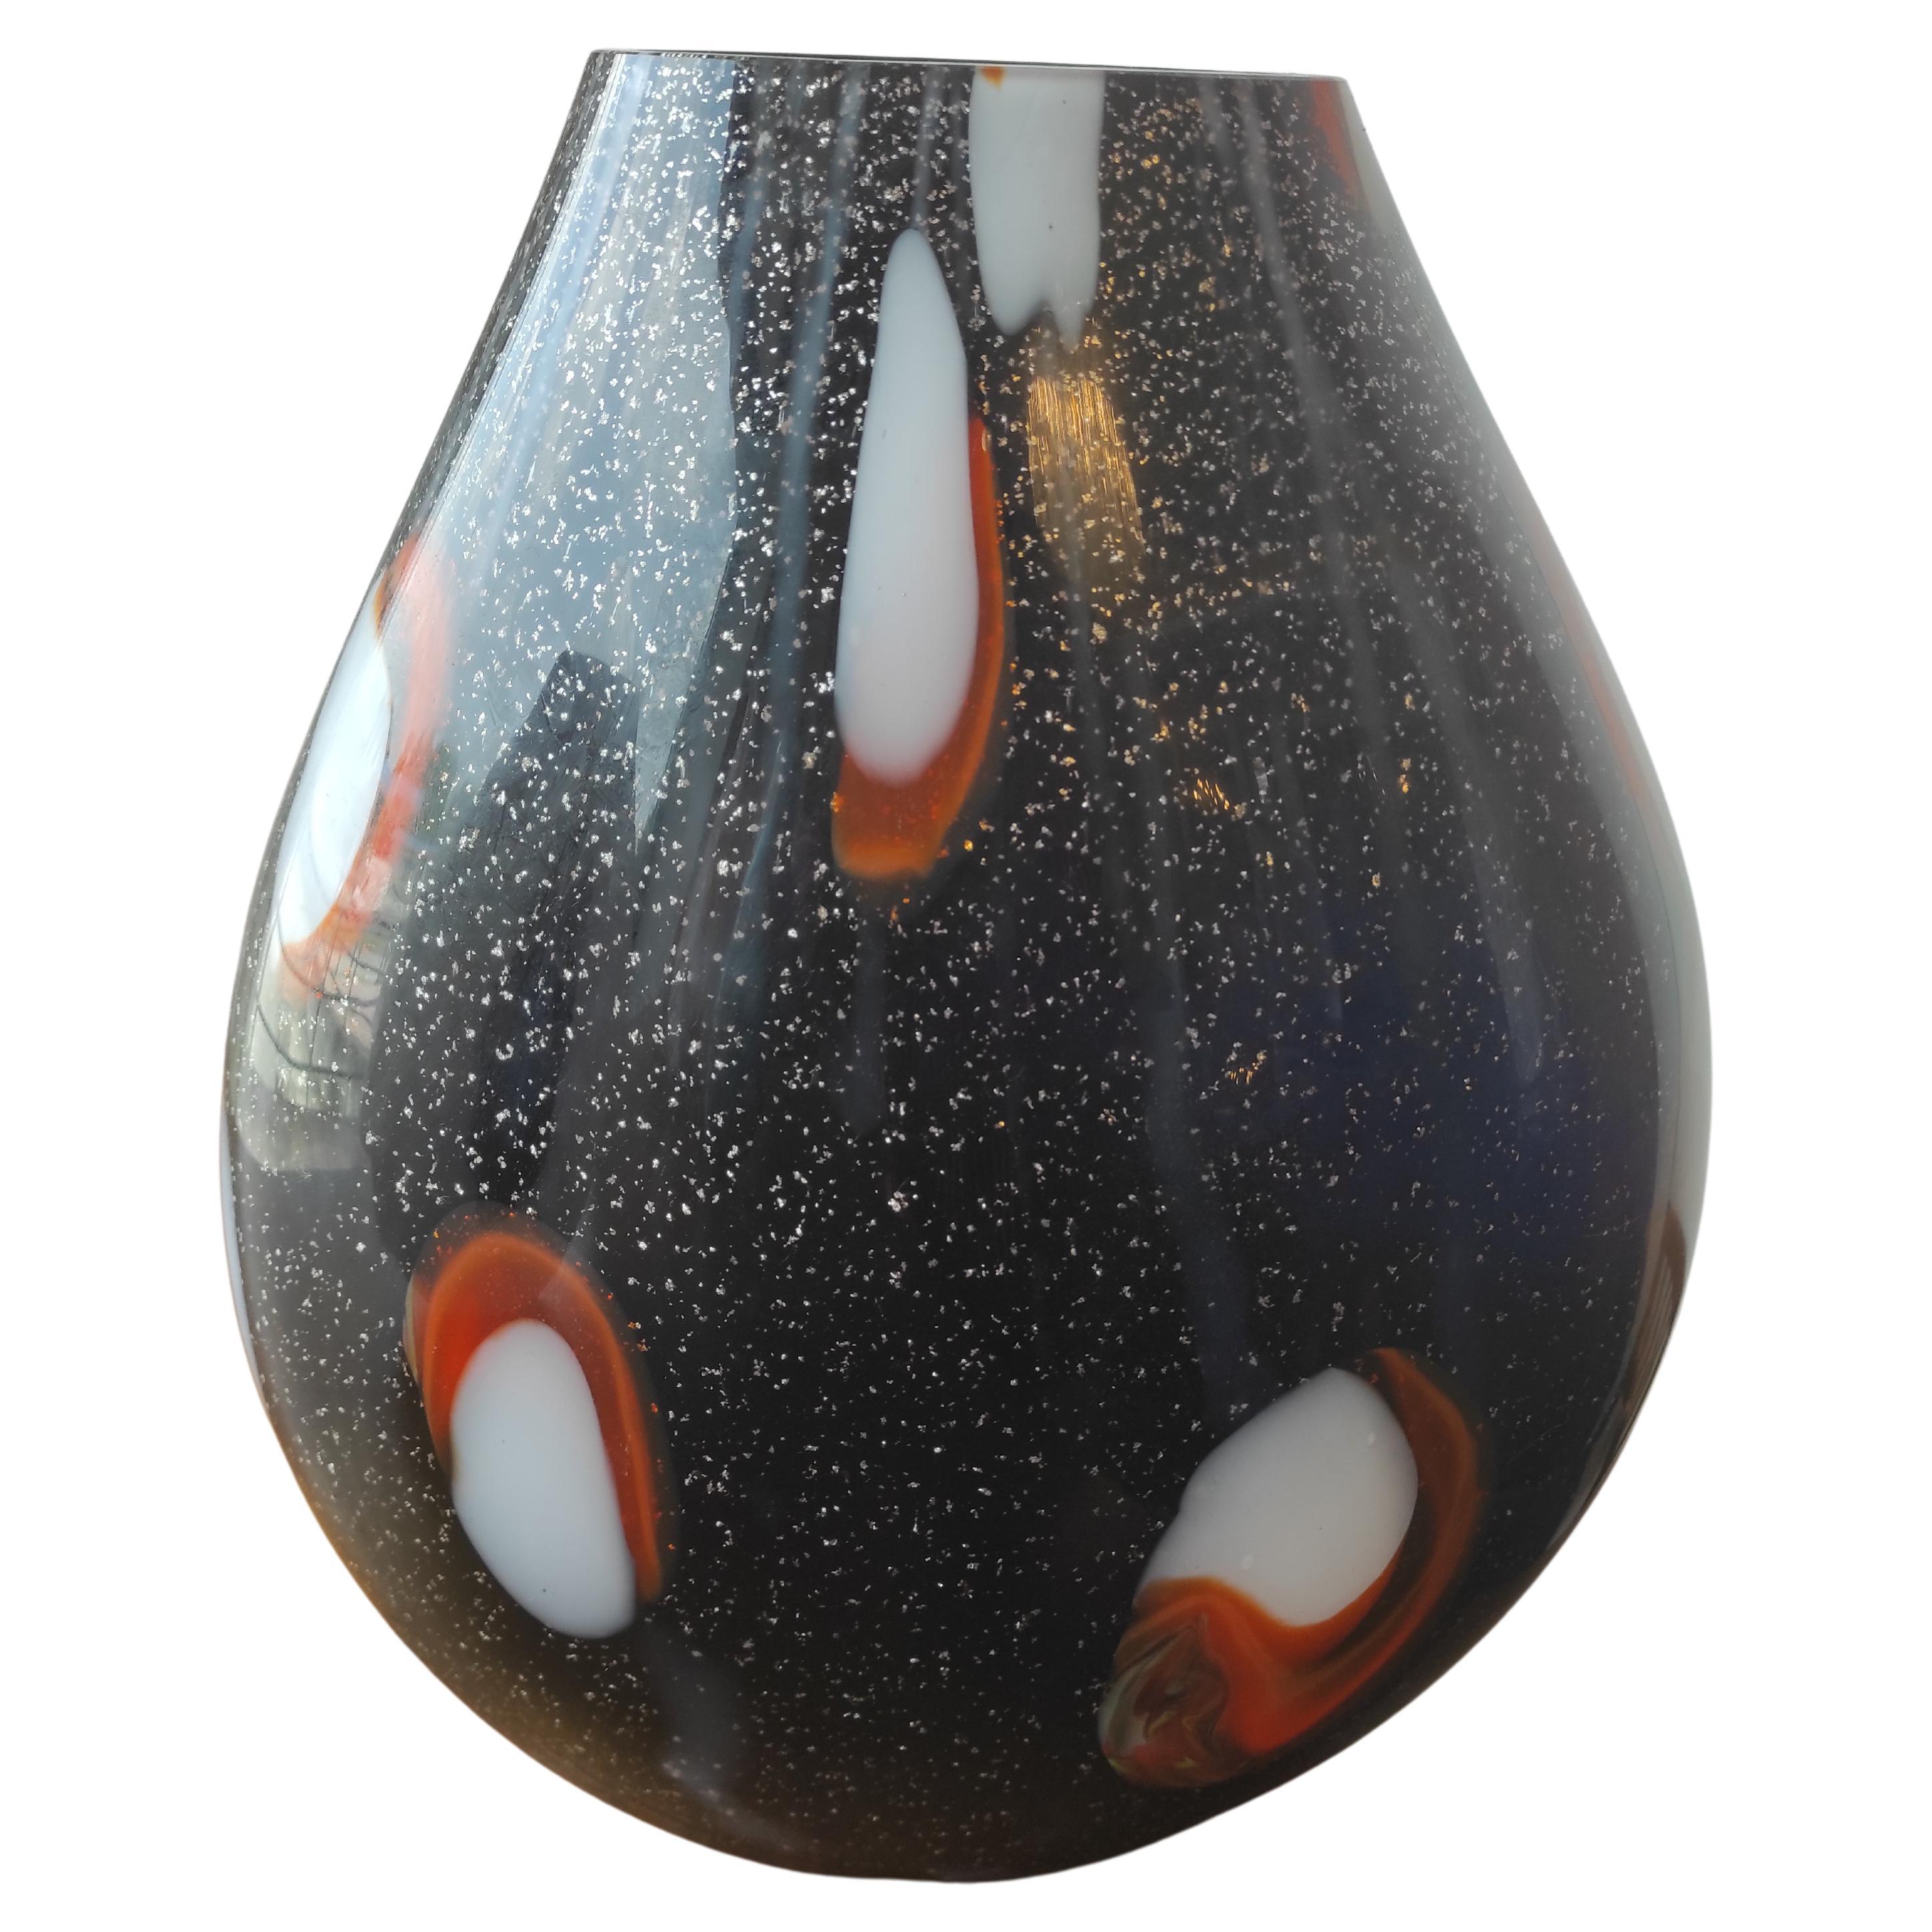 Blown glass vase with murrine